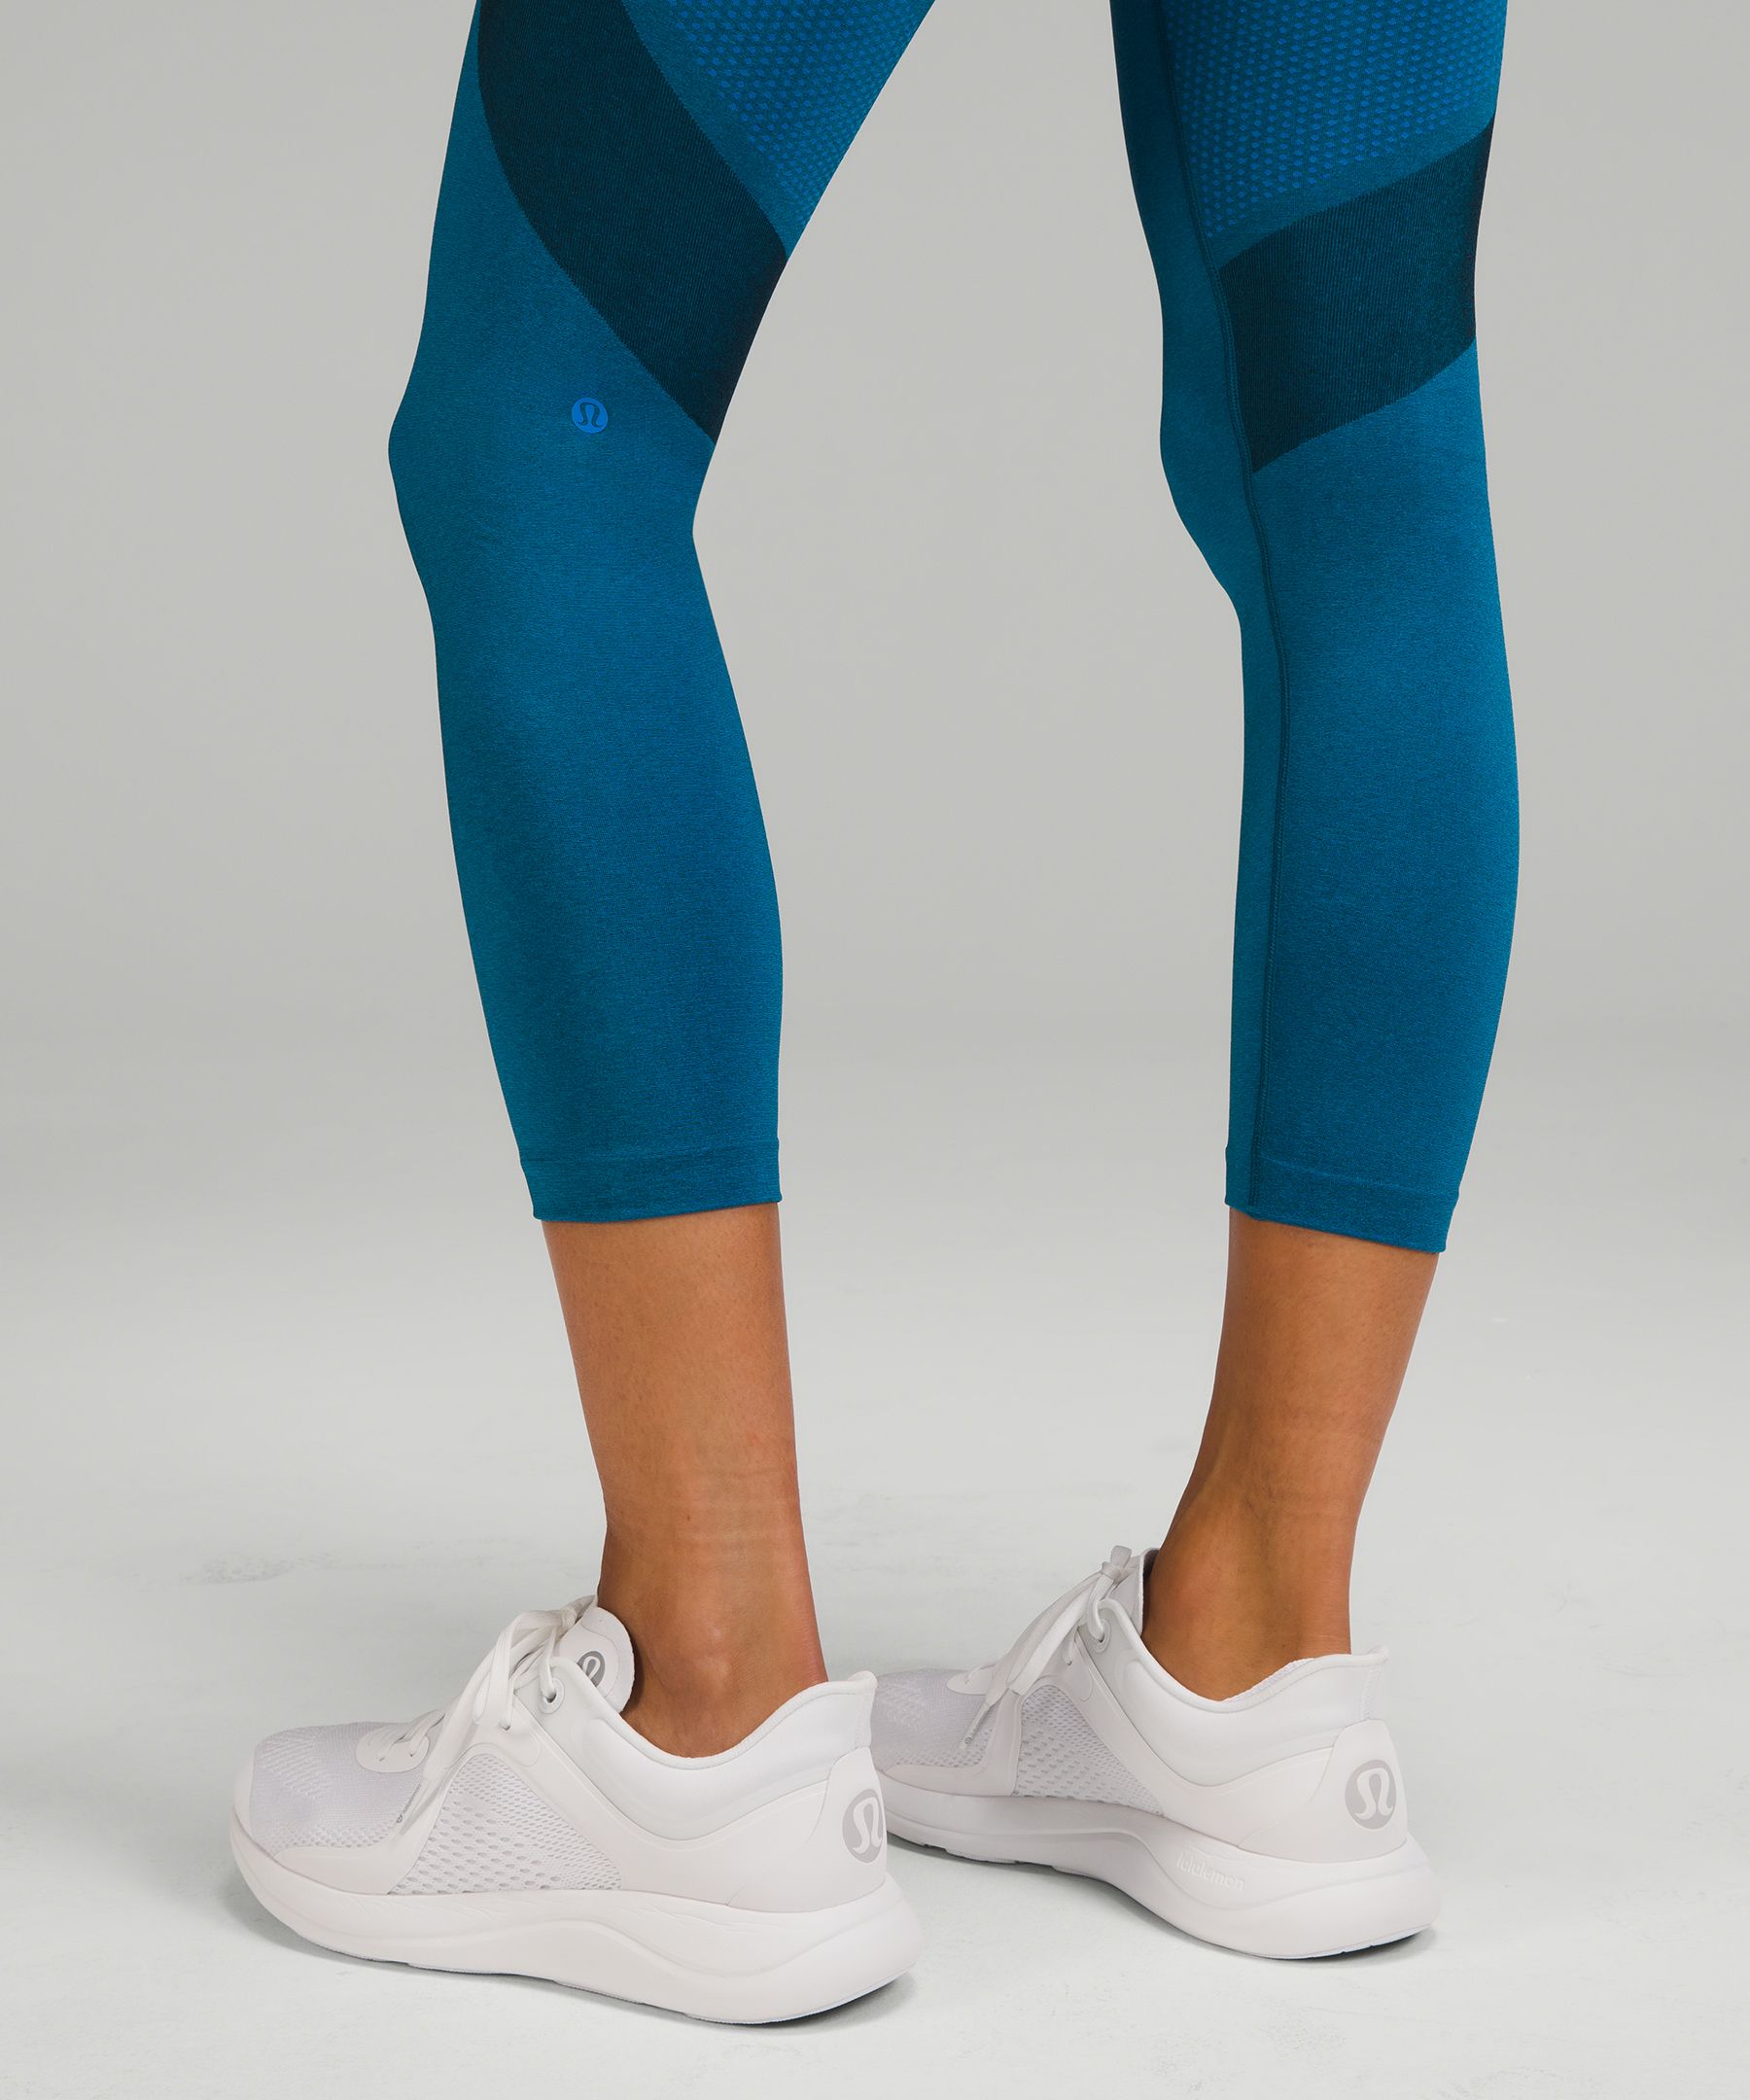 Lululemon Mesh/Criss-Cross Detail Yoga Pants (25” / Size 6) in